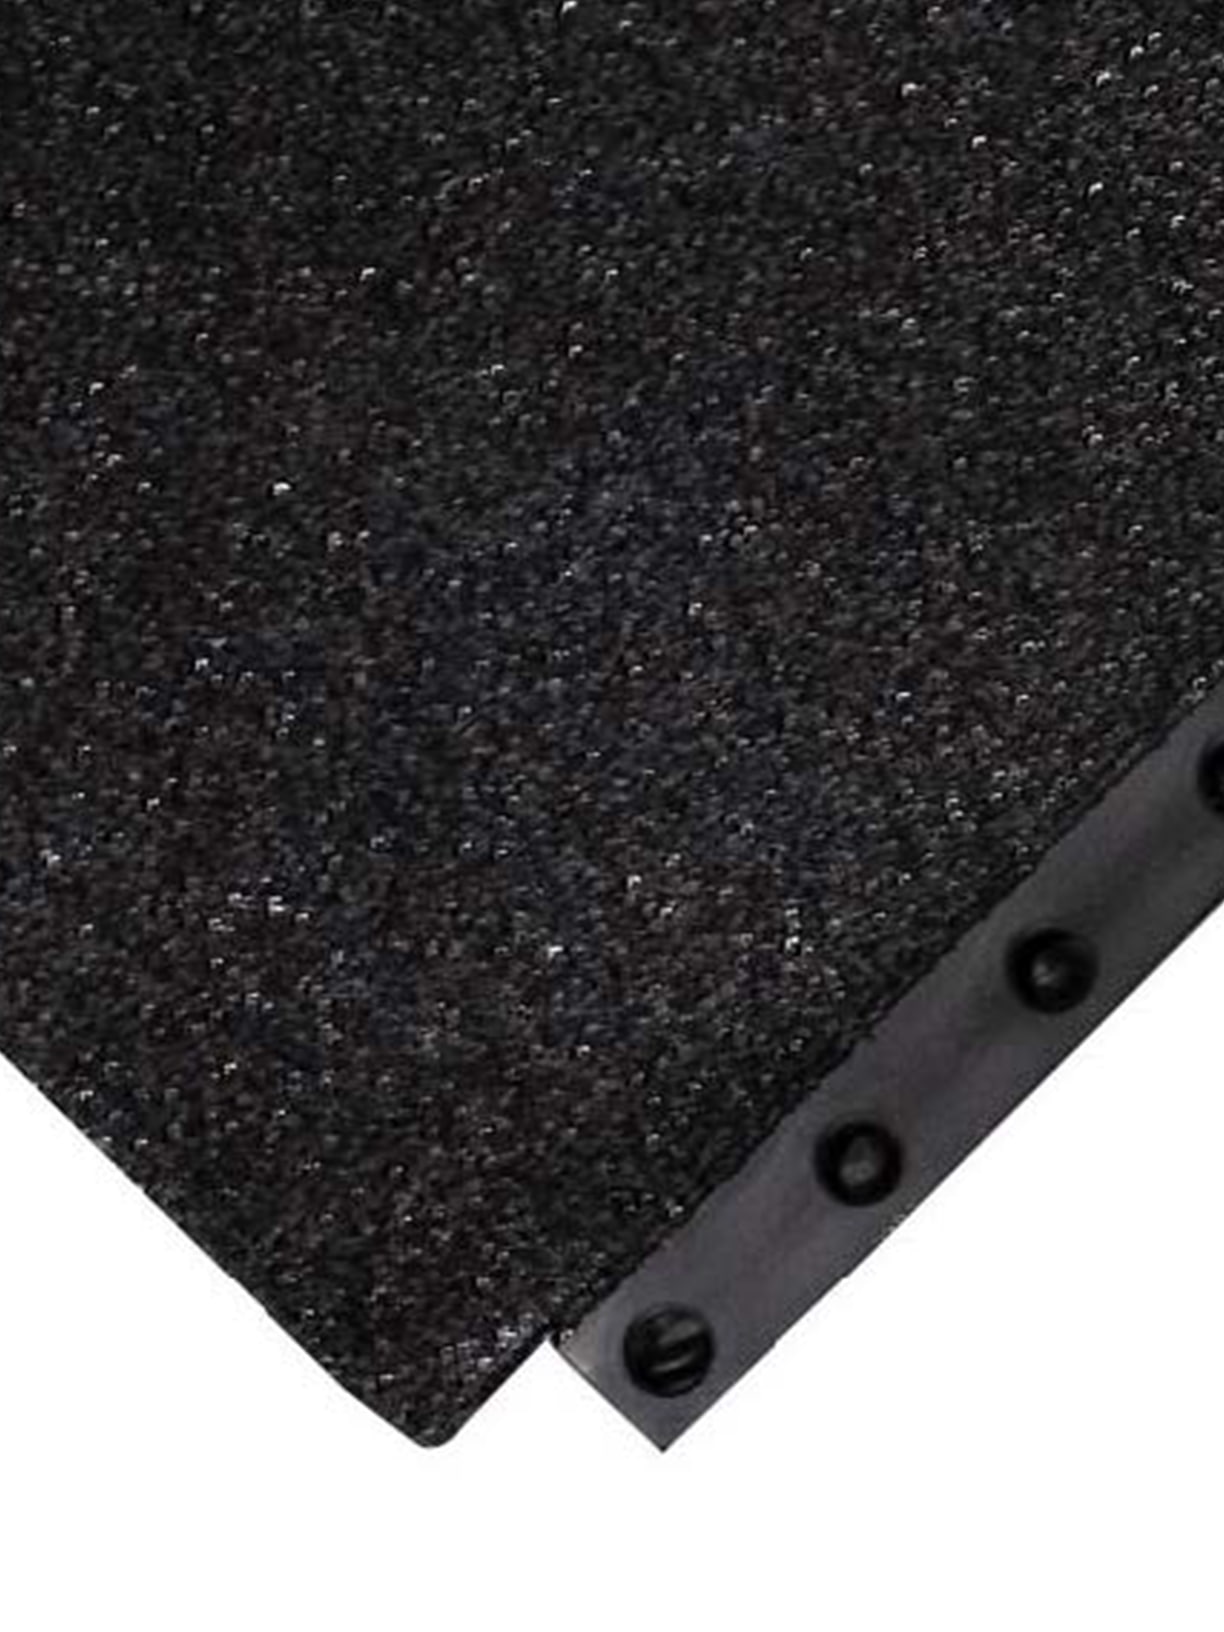 ErgoTech Products: Tehnoguma - Non slip Floor mats 4